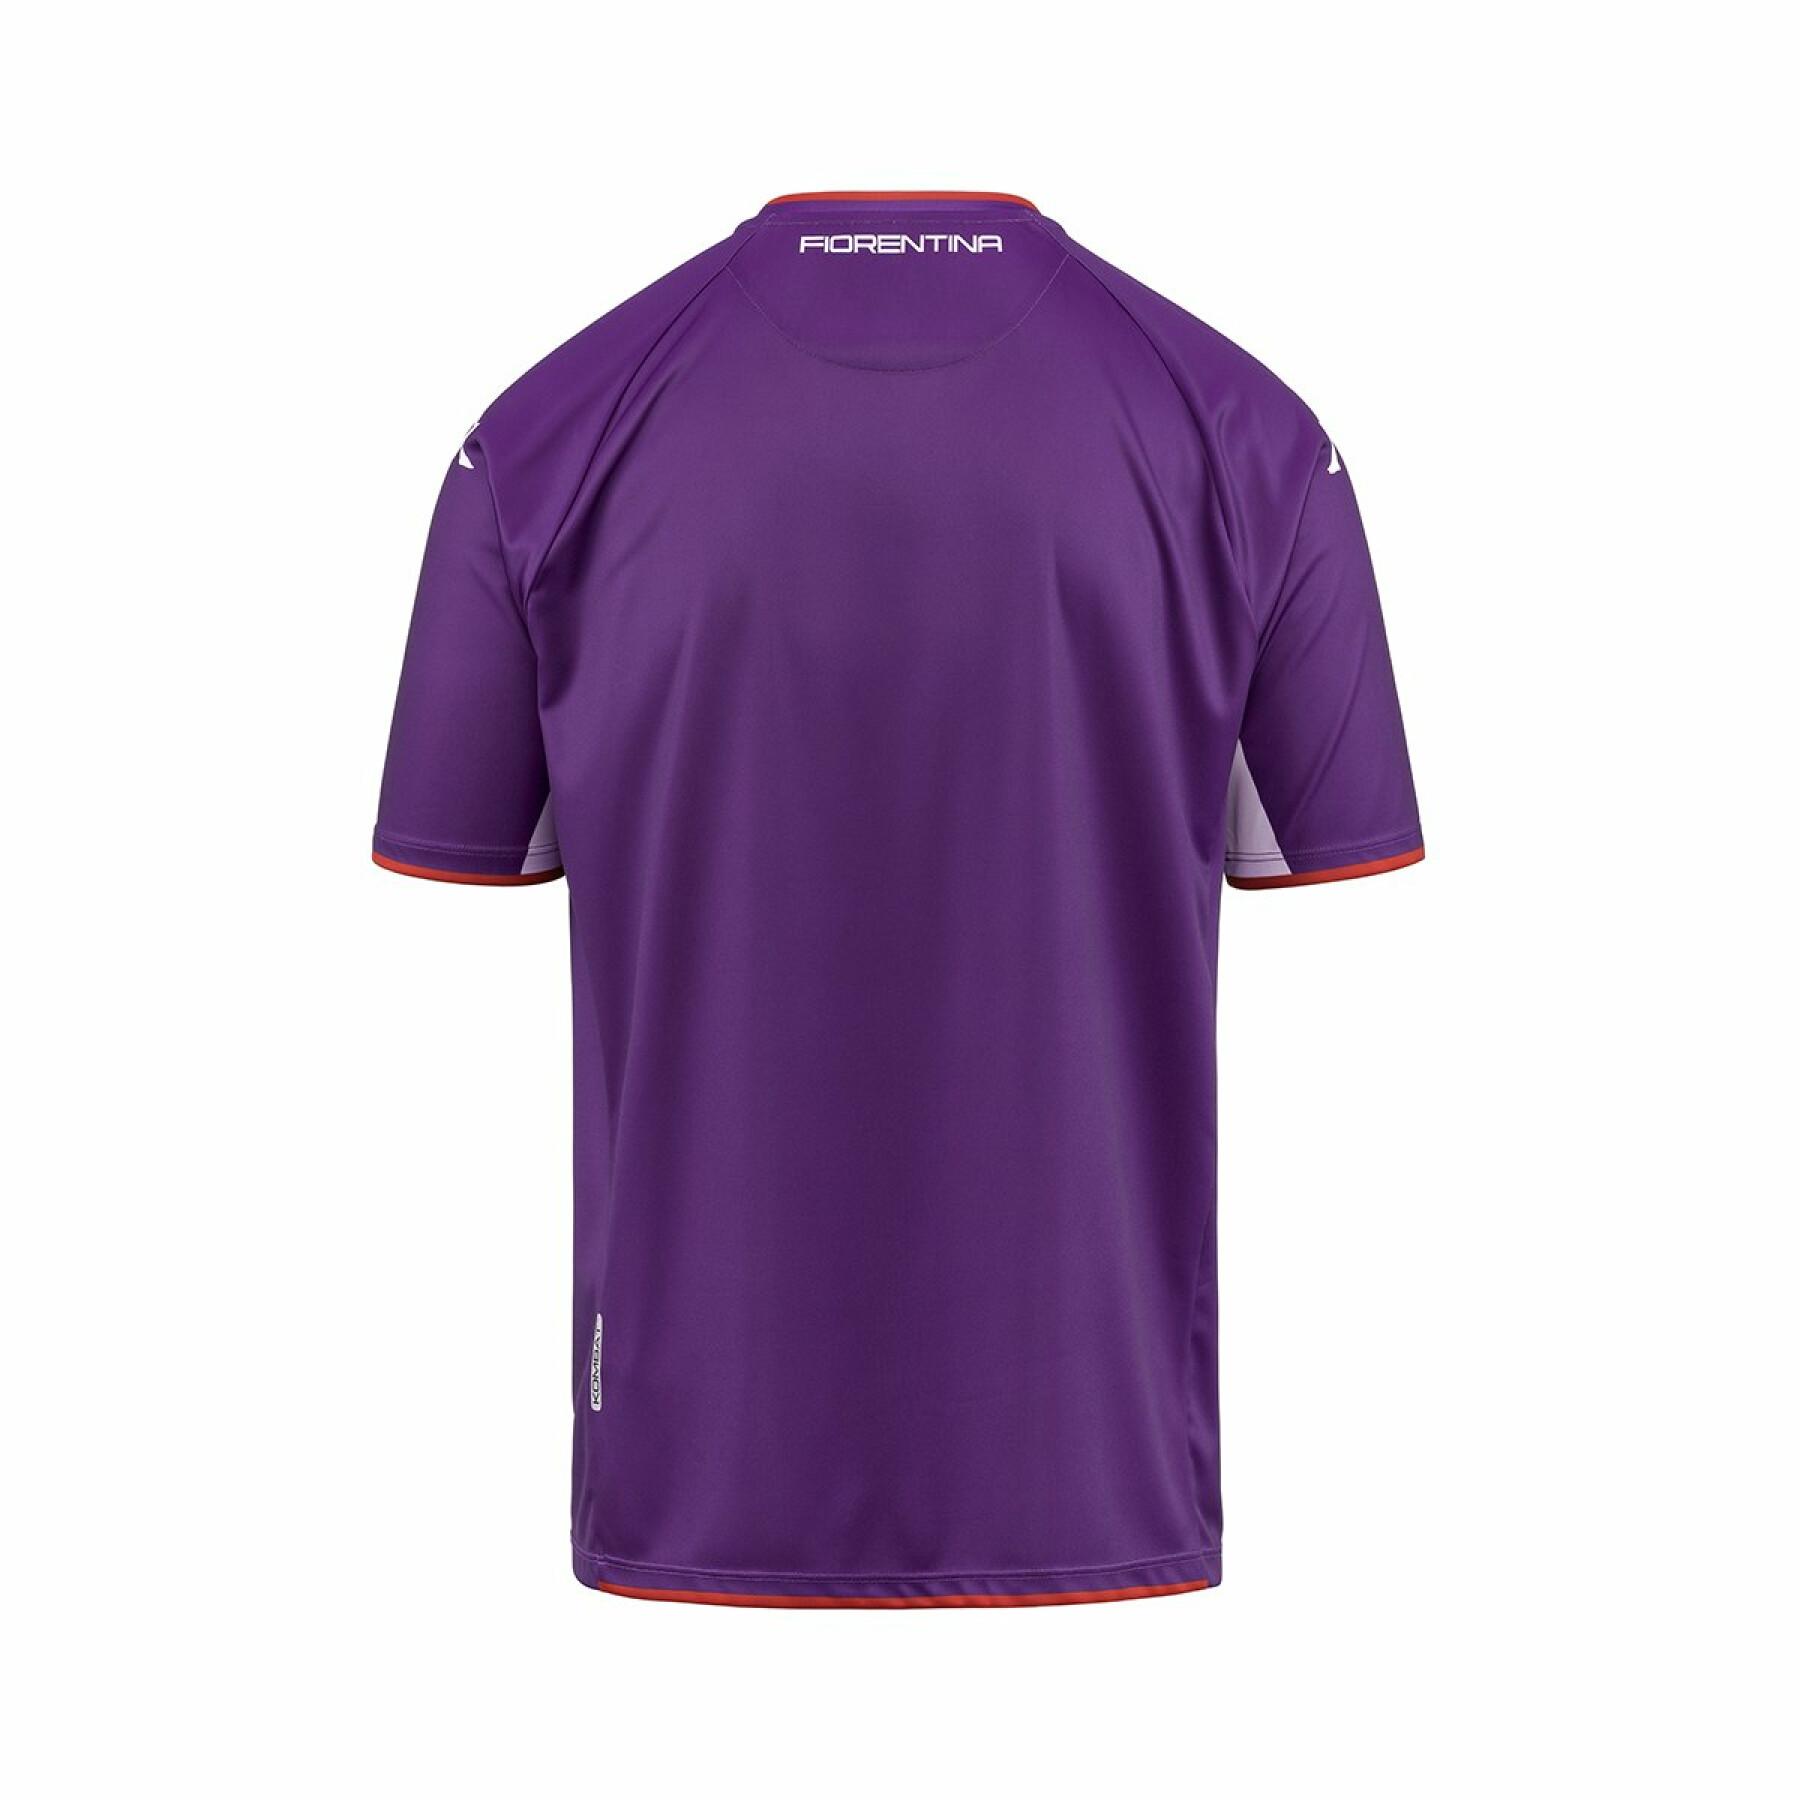 Camiseta primera equipación Fiorentina AC 2021/22